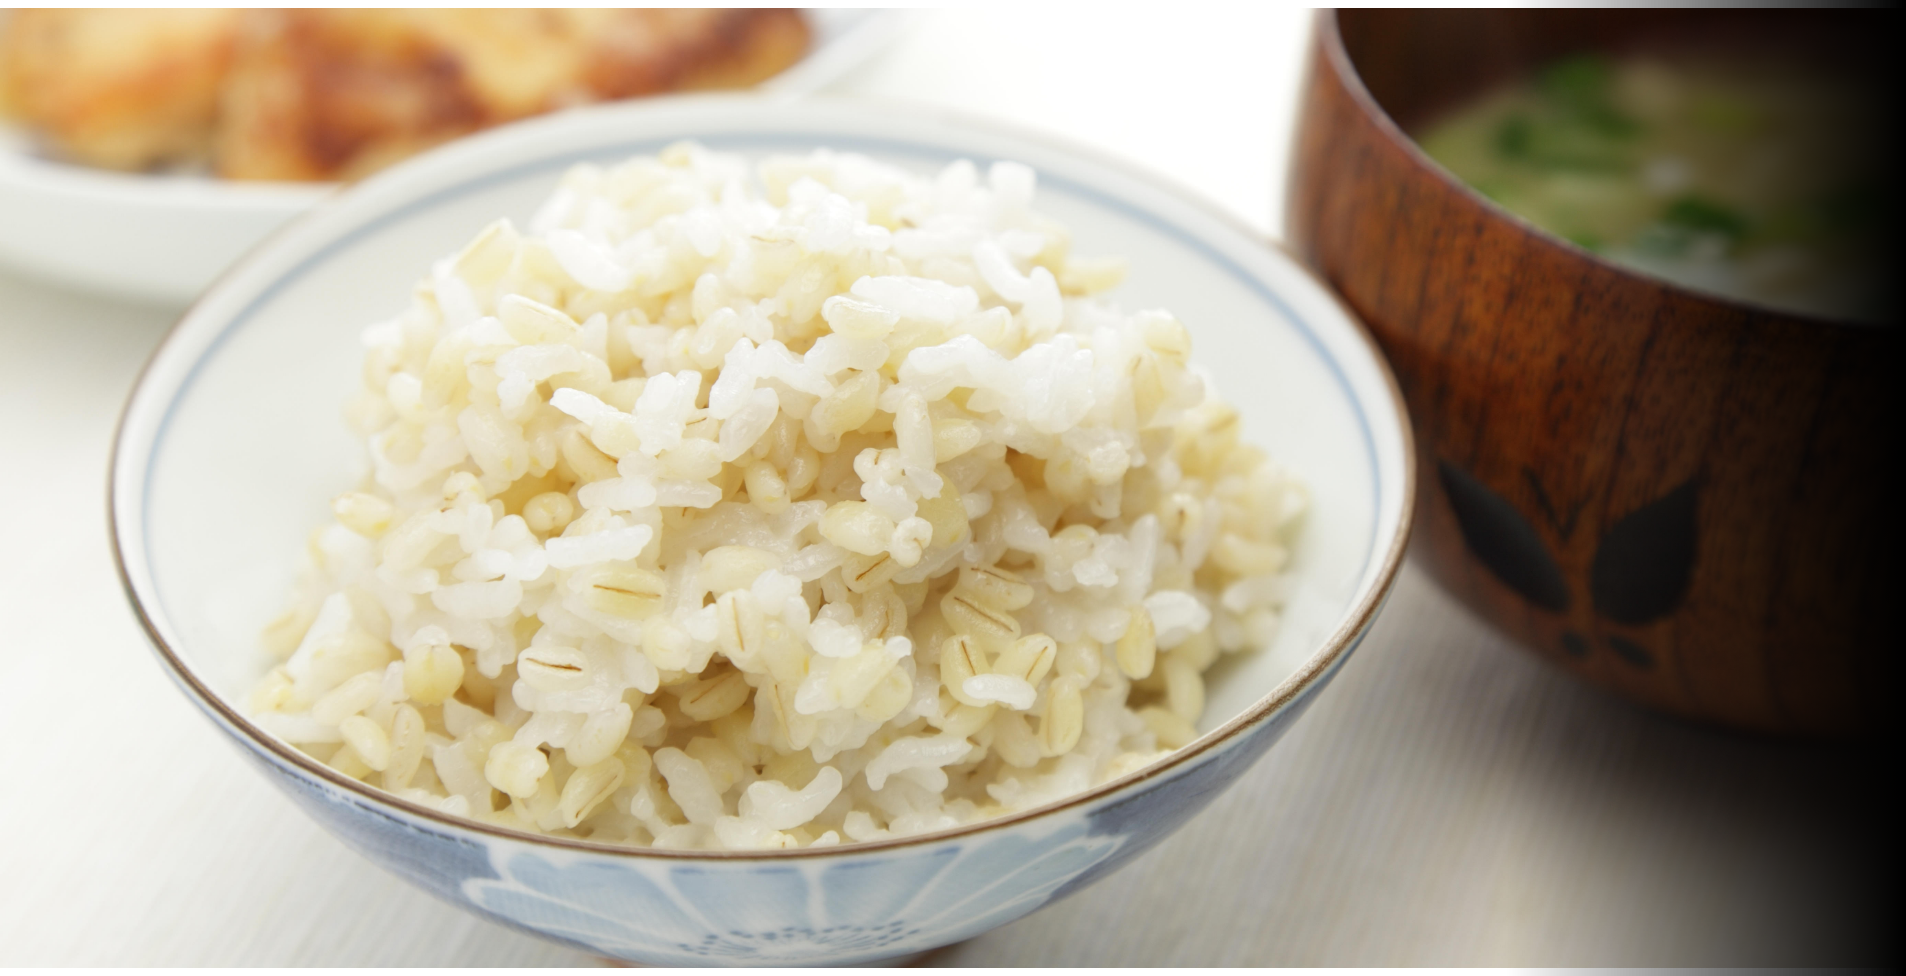 "Barley Rice" setting